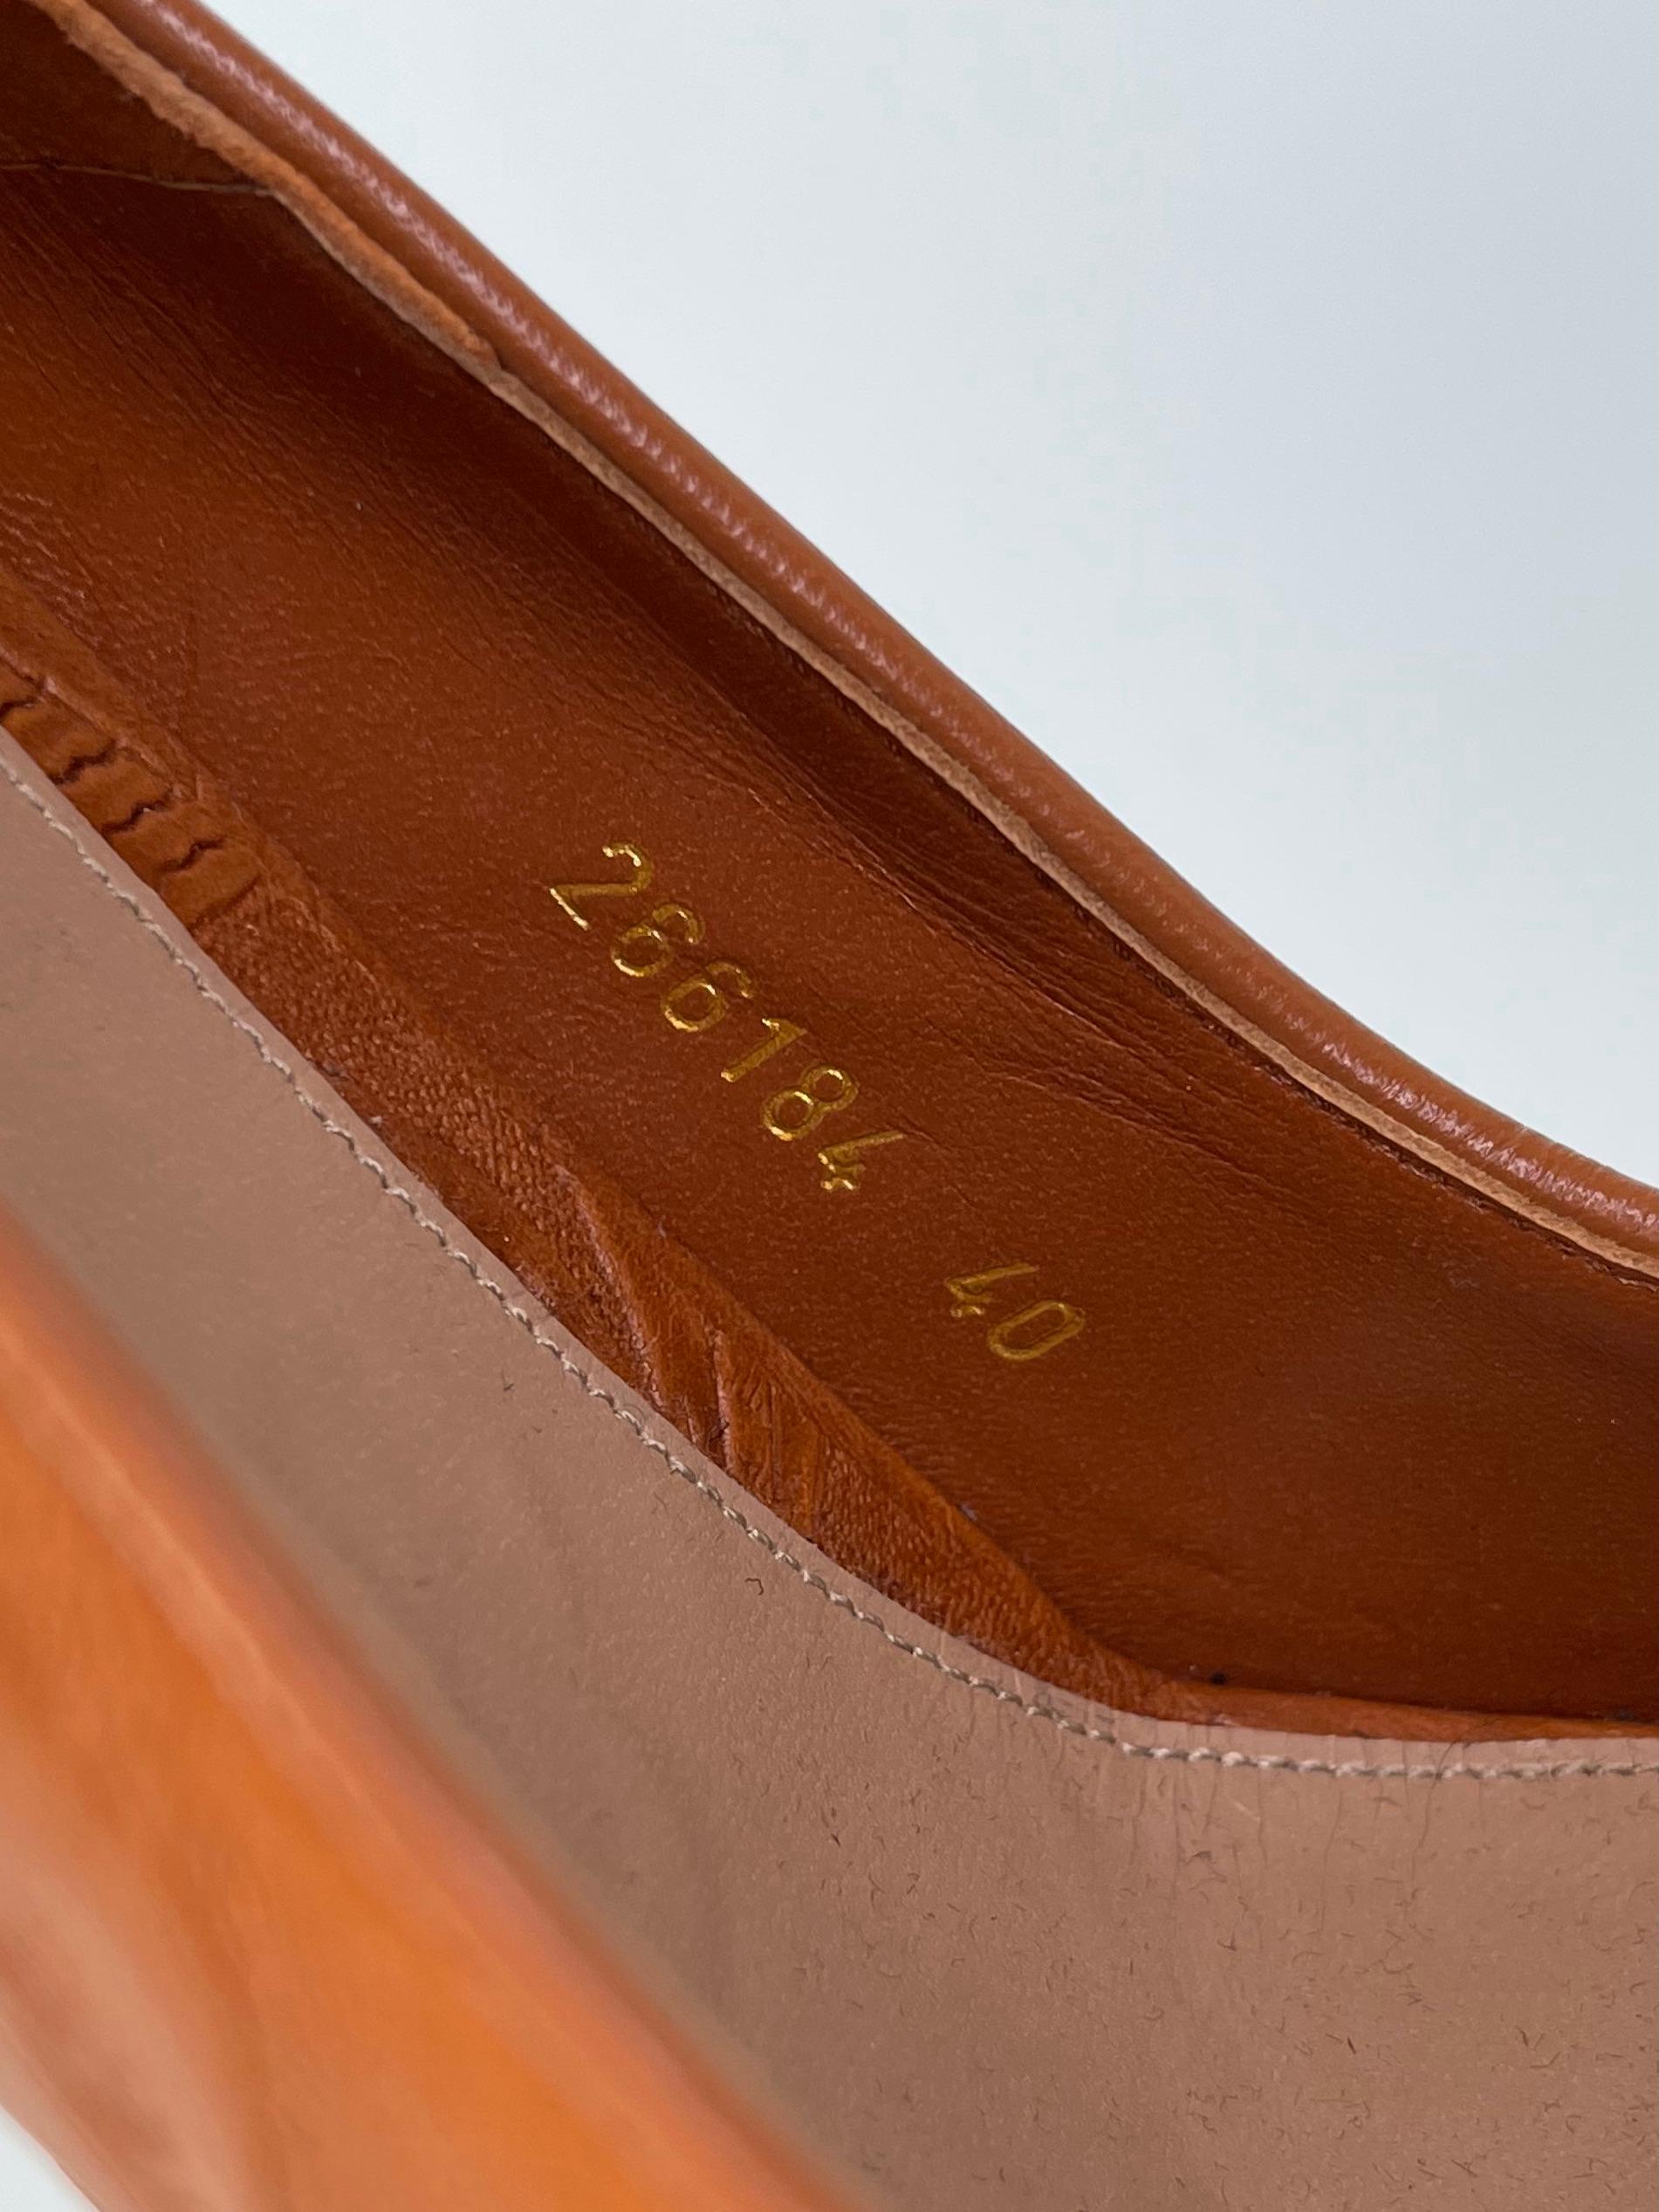 Alexander McQueen Western Leather Bandolero Brandy Sandal Heel (40 EU) In Good Condition For Sale In Montreal, Quebec